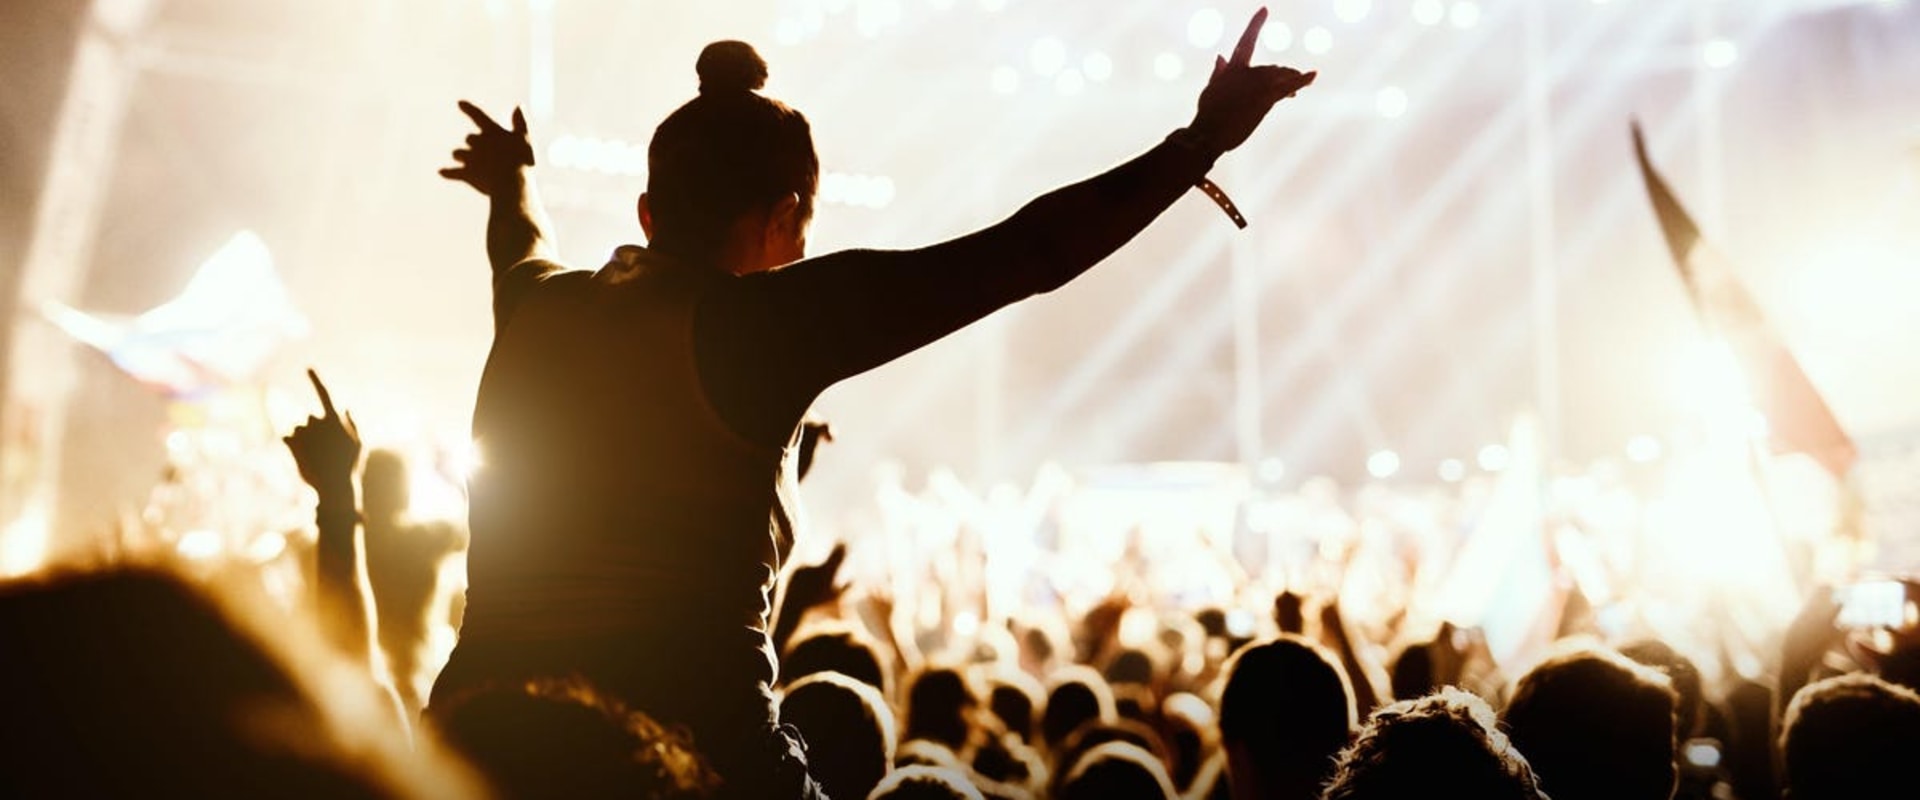 Are music festivals worth it?